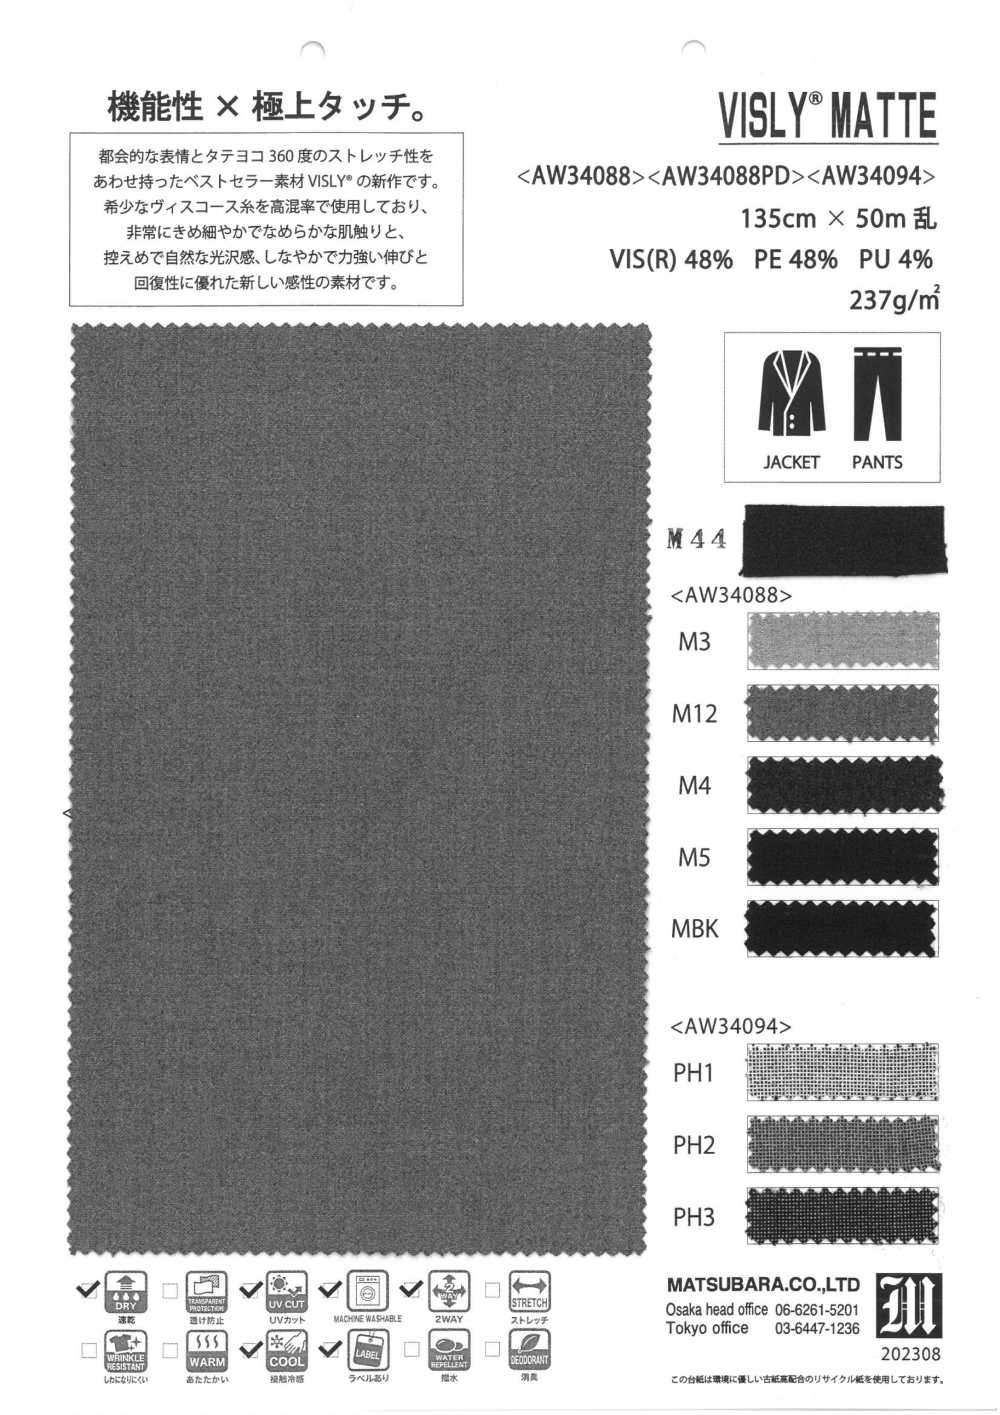 AW34088 Bisley Mat[Textilgewebe] Matsubara